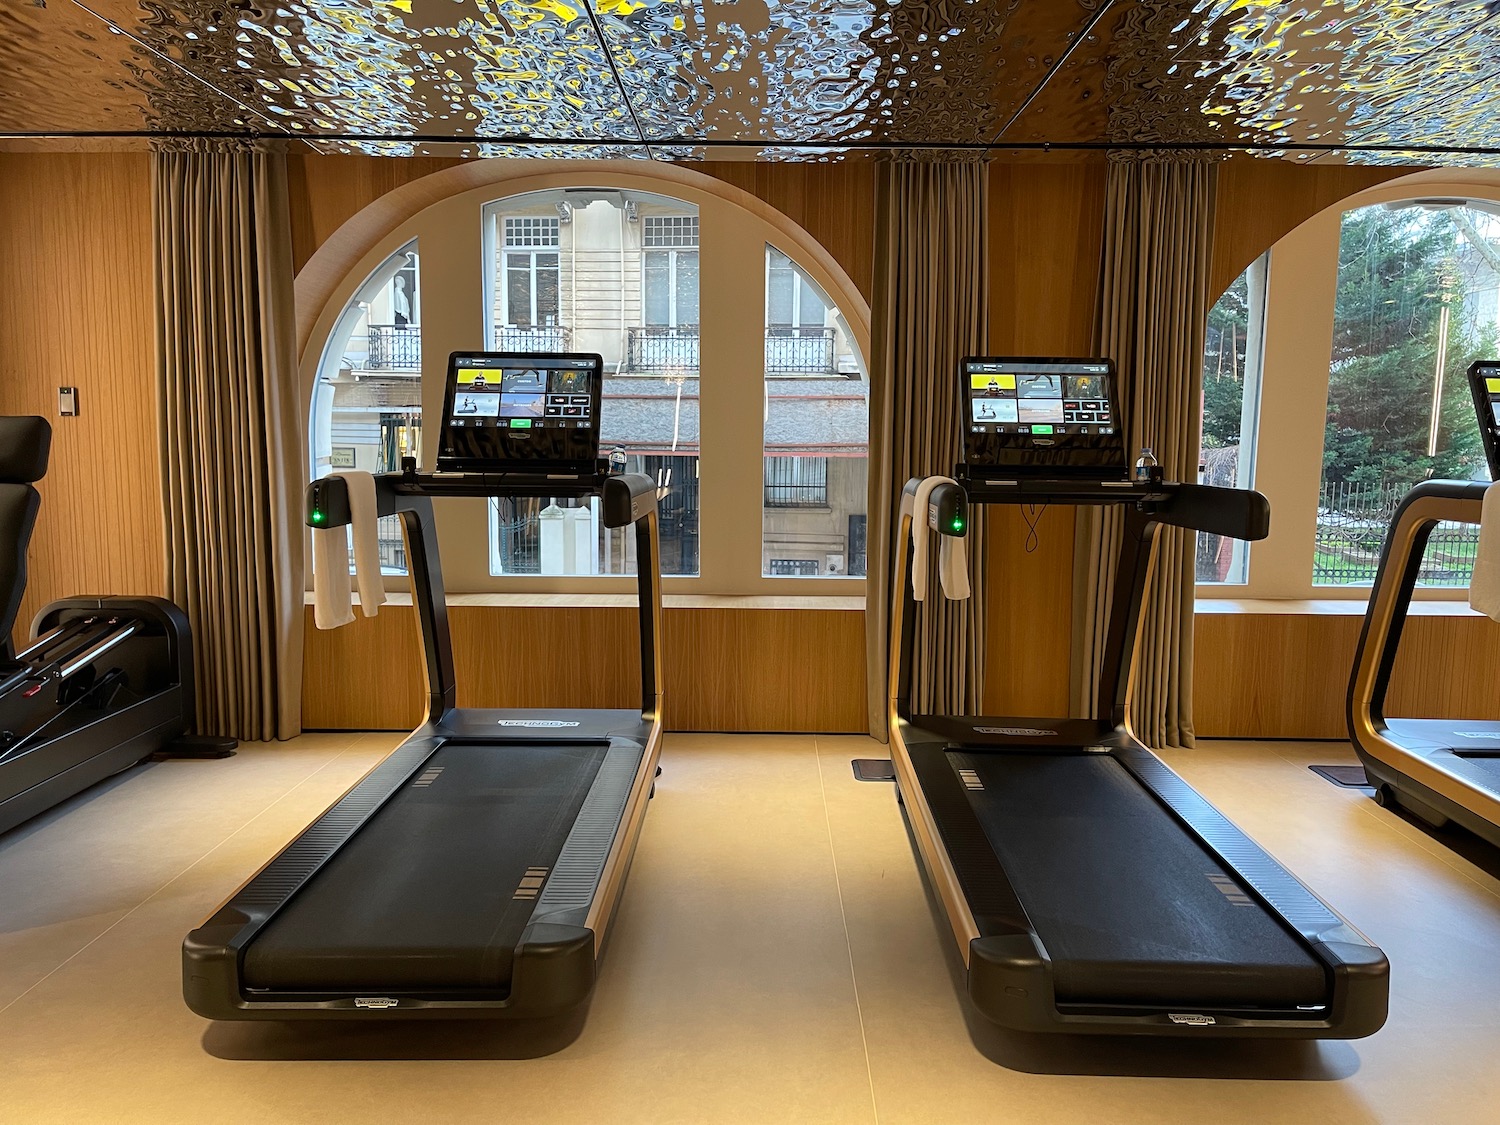 tread treadmills in a room with windows